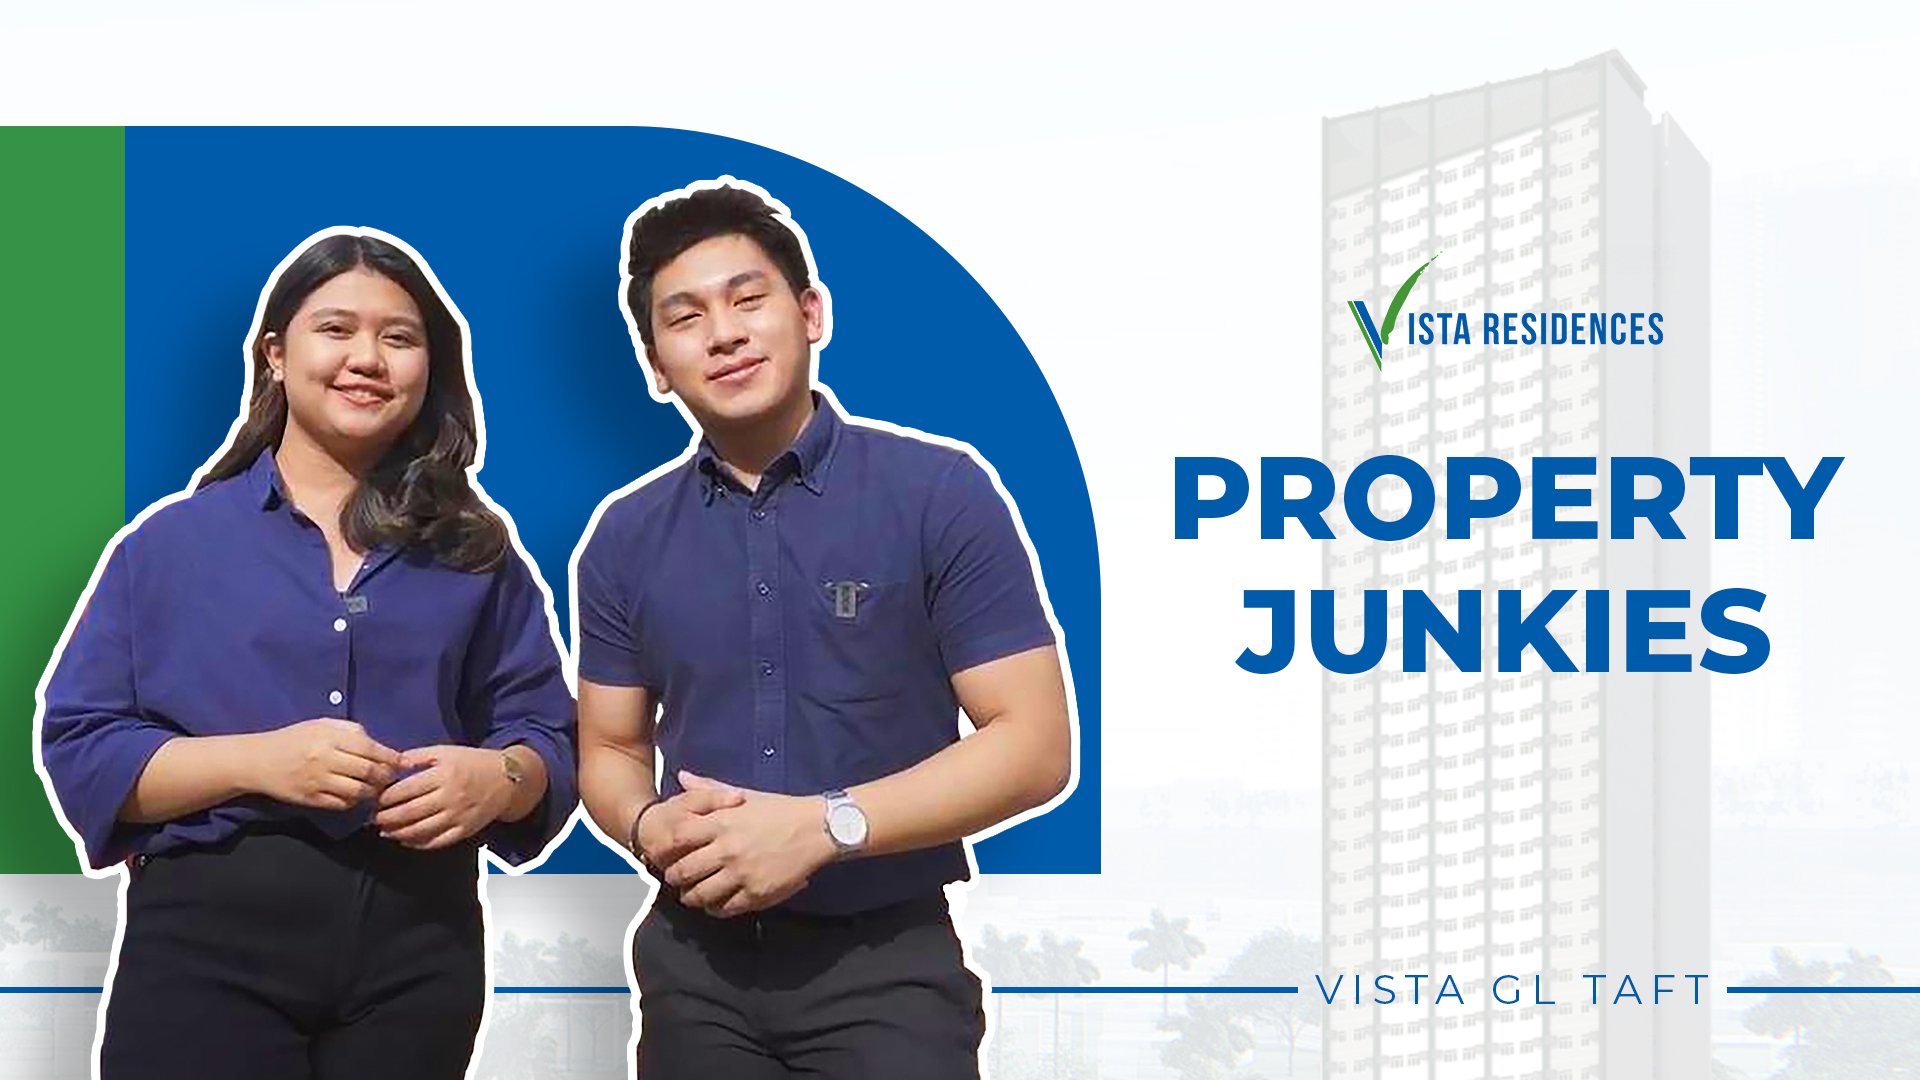 Property Junkies_Vista GL Taft